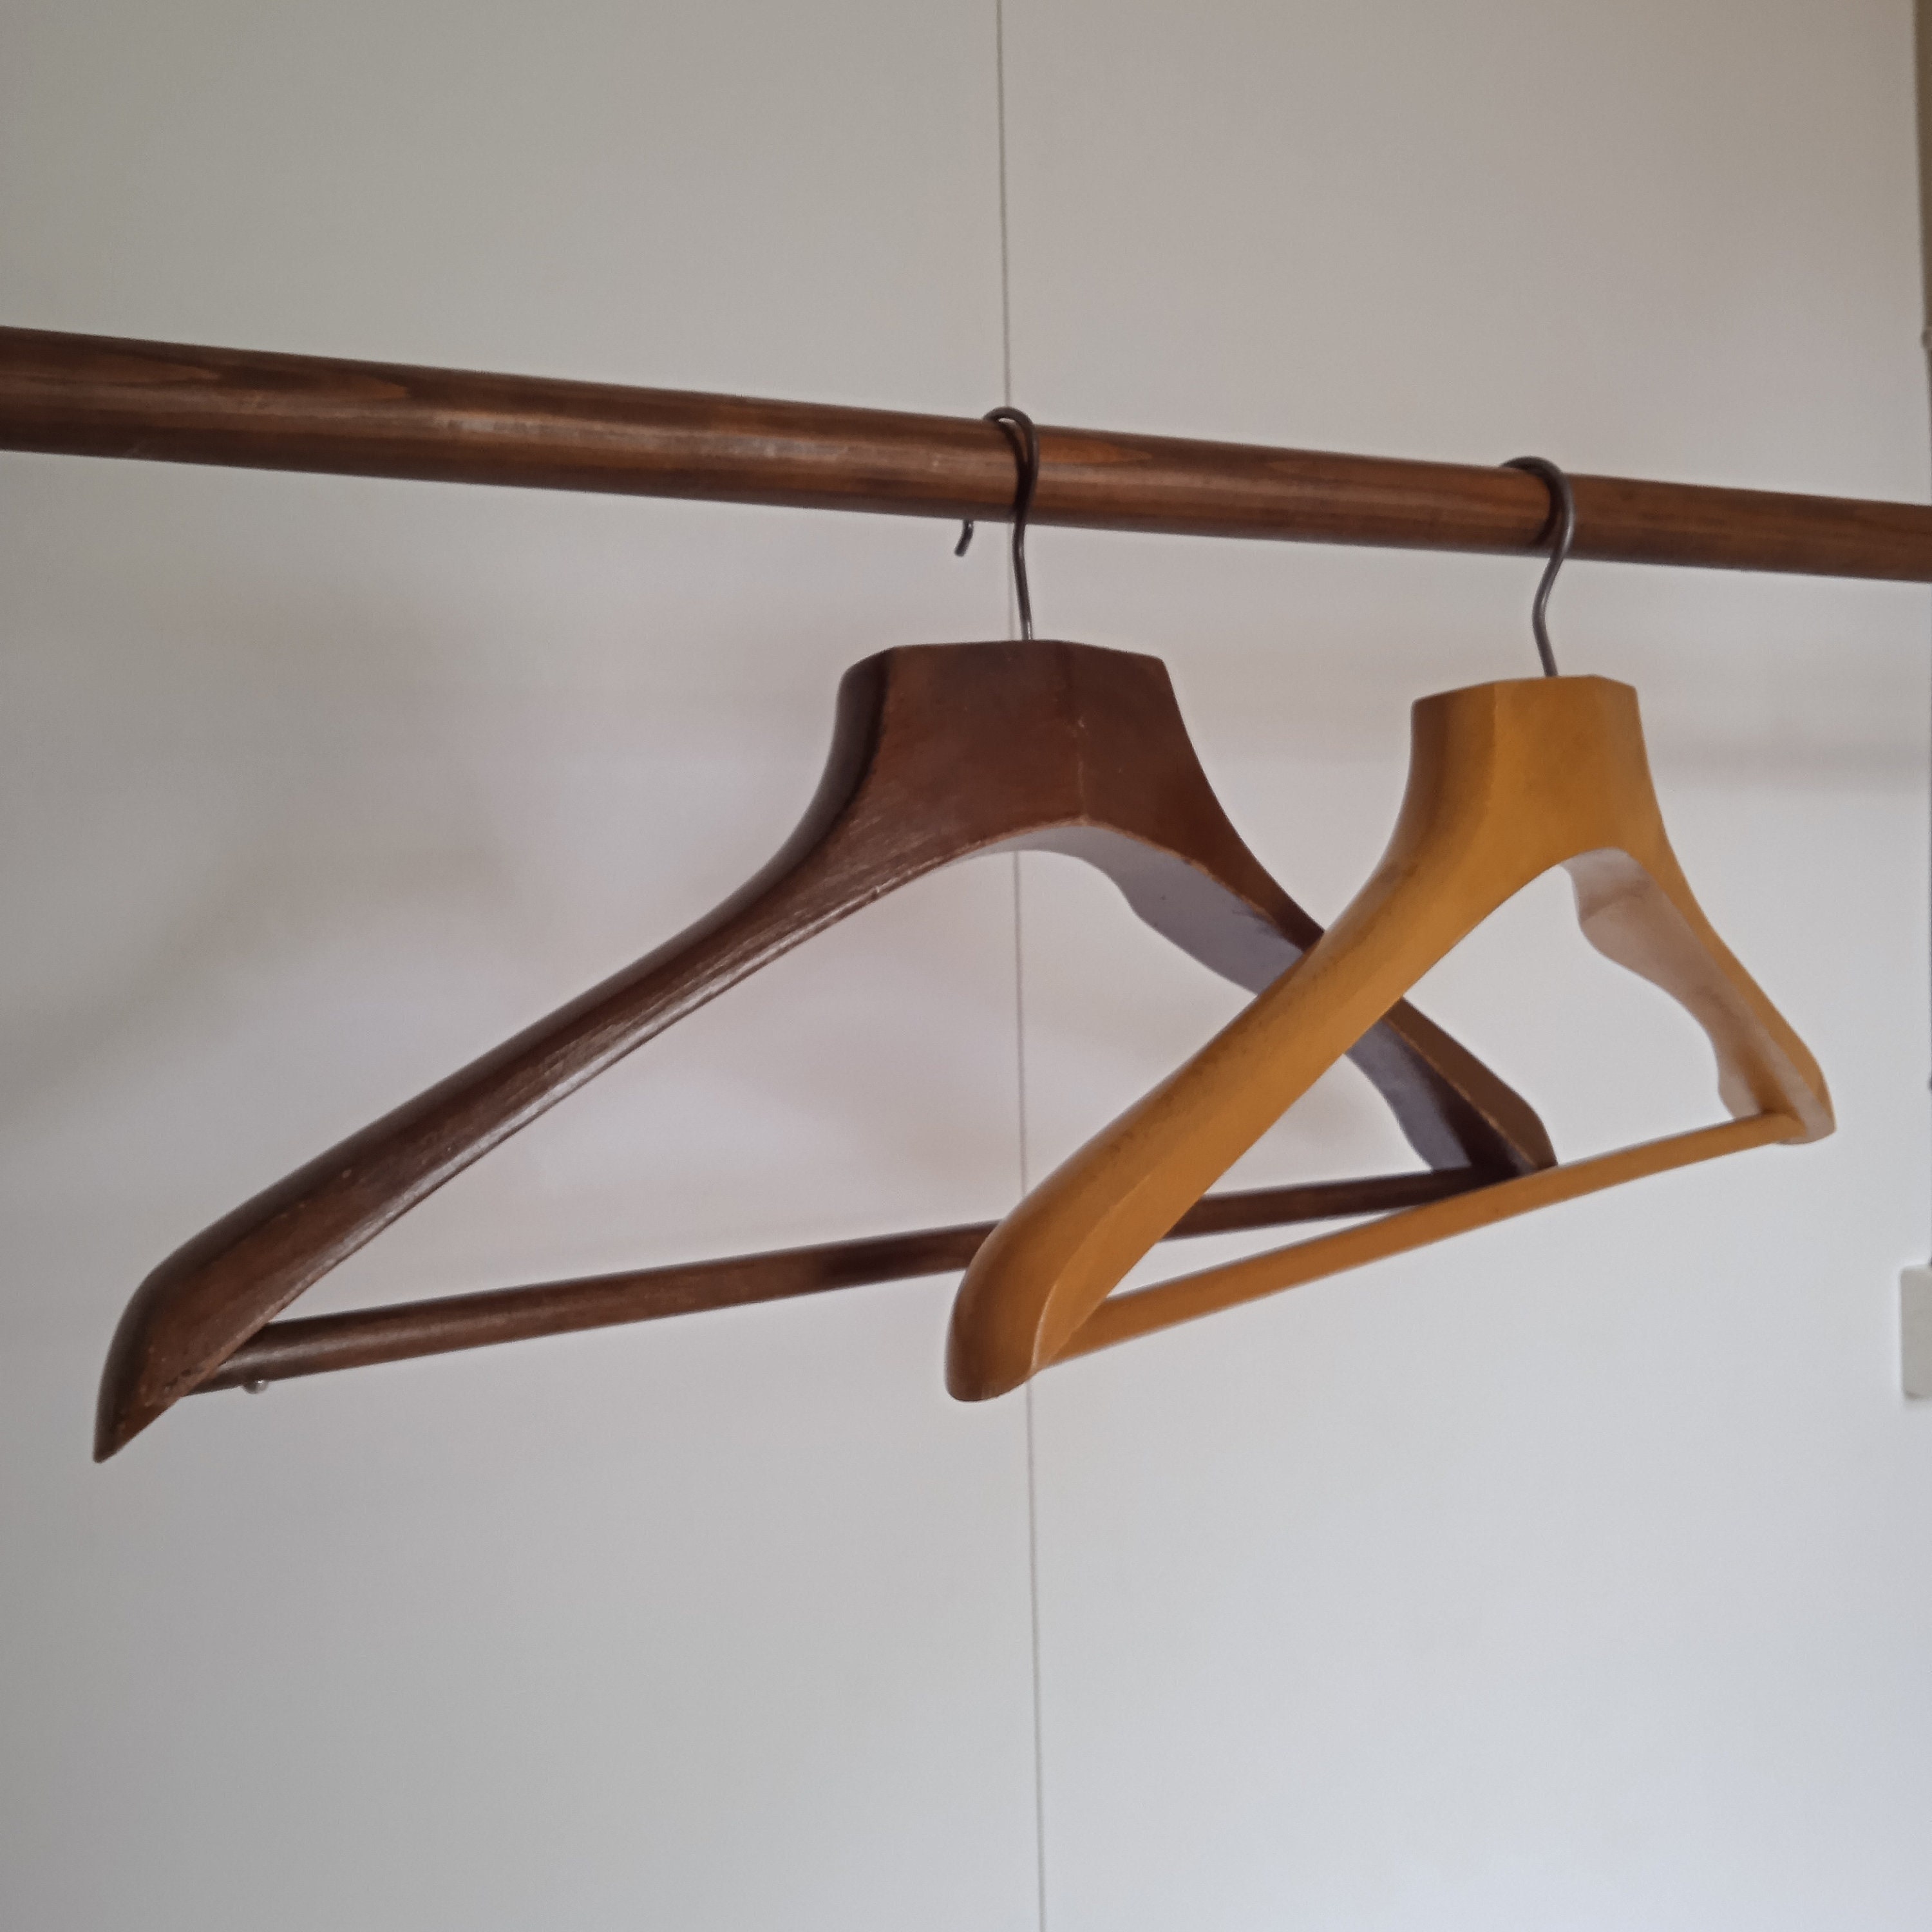 Oak Leaf Wood Hangers, 6-Pack Coat Hanger Clothes Hangers with